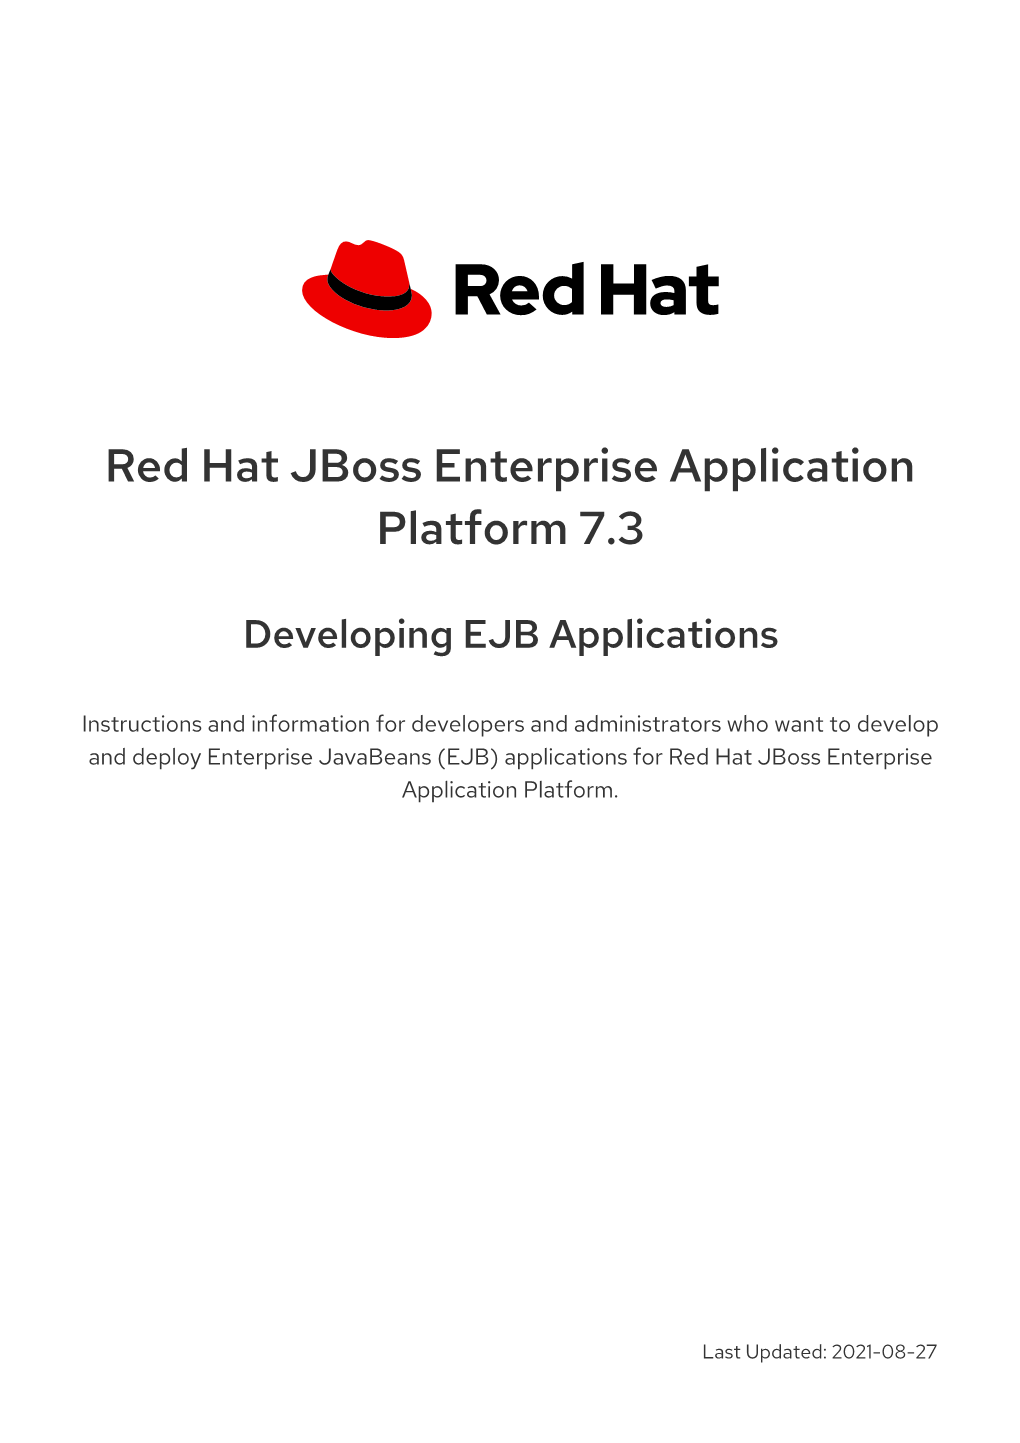 Red Hat Jboss Enterprise Application Platform 7.3 Developing EJB Applications